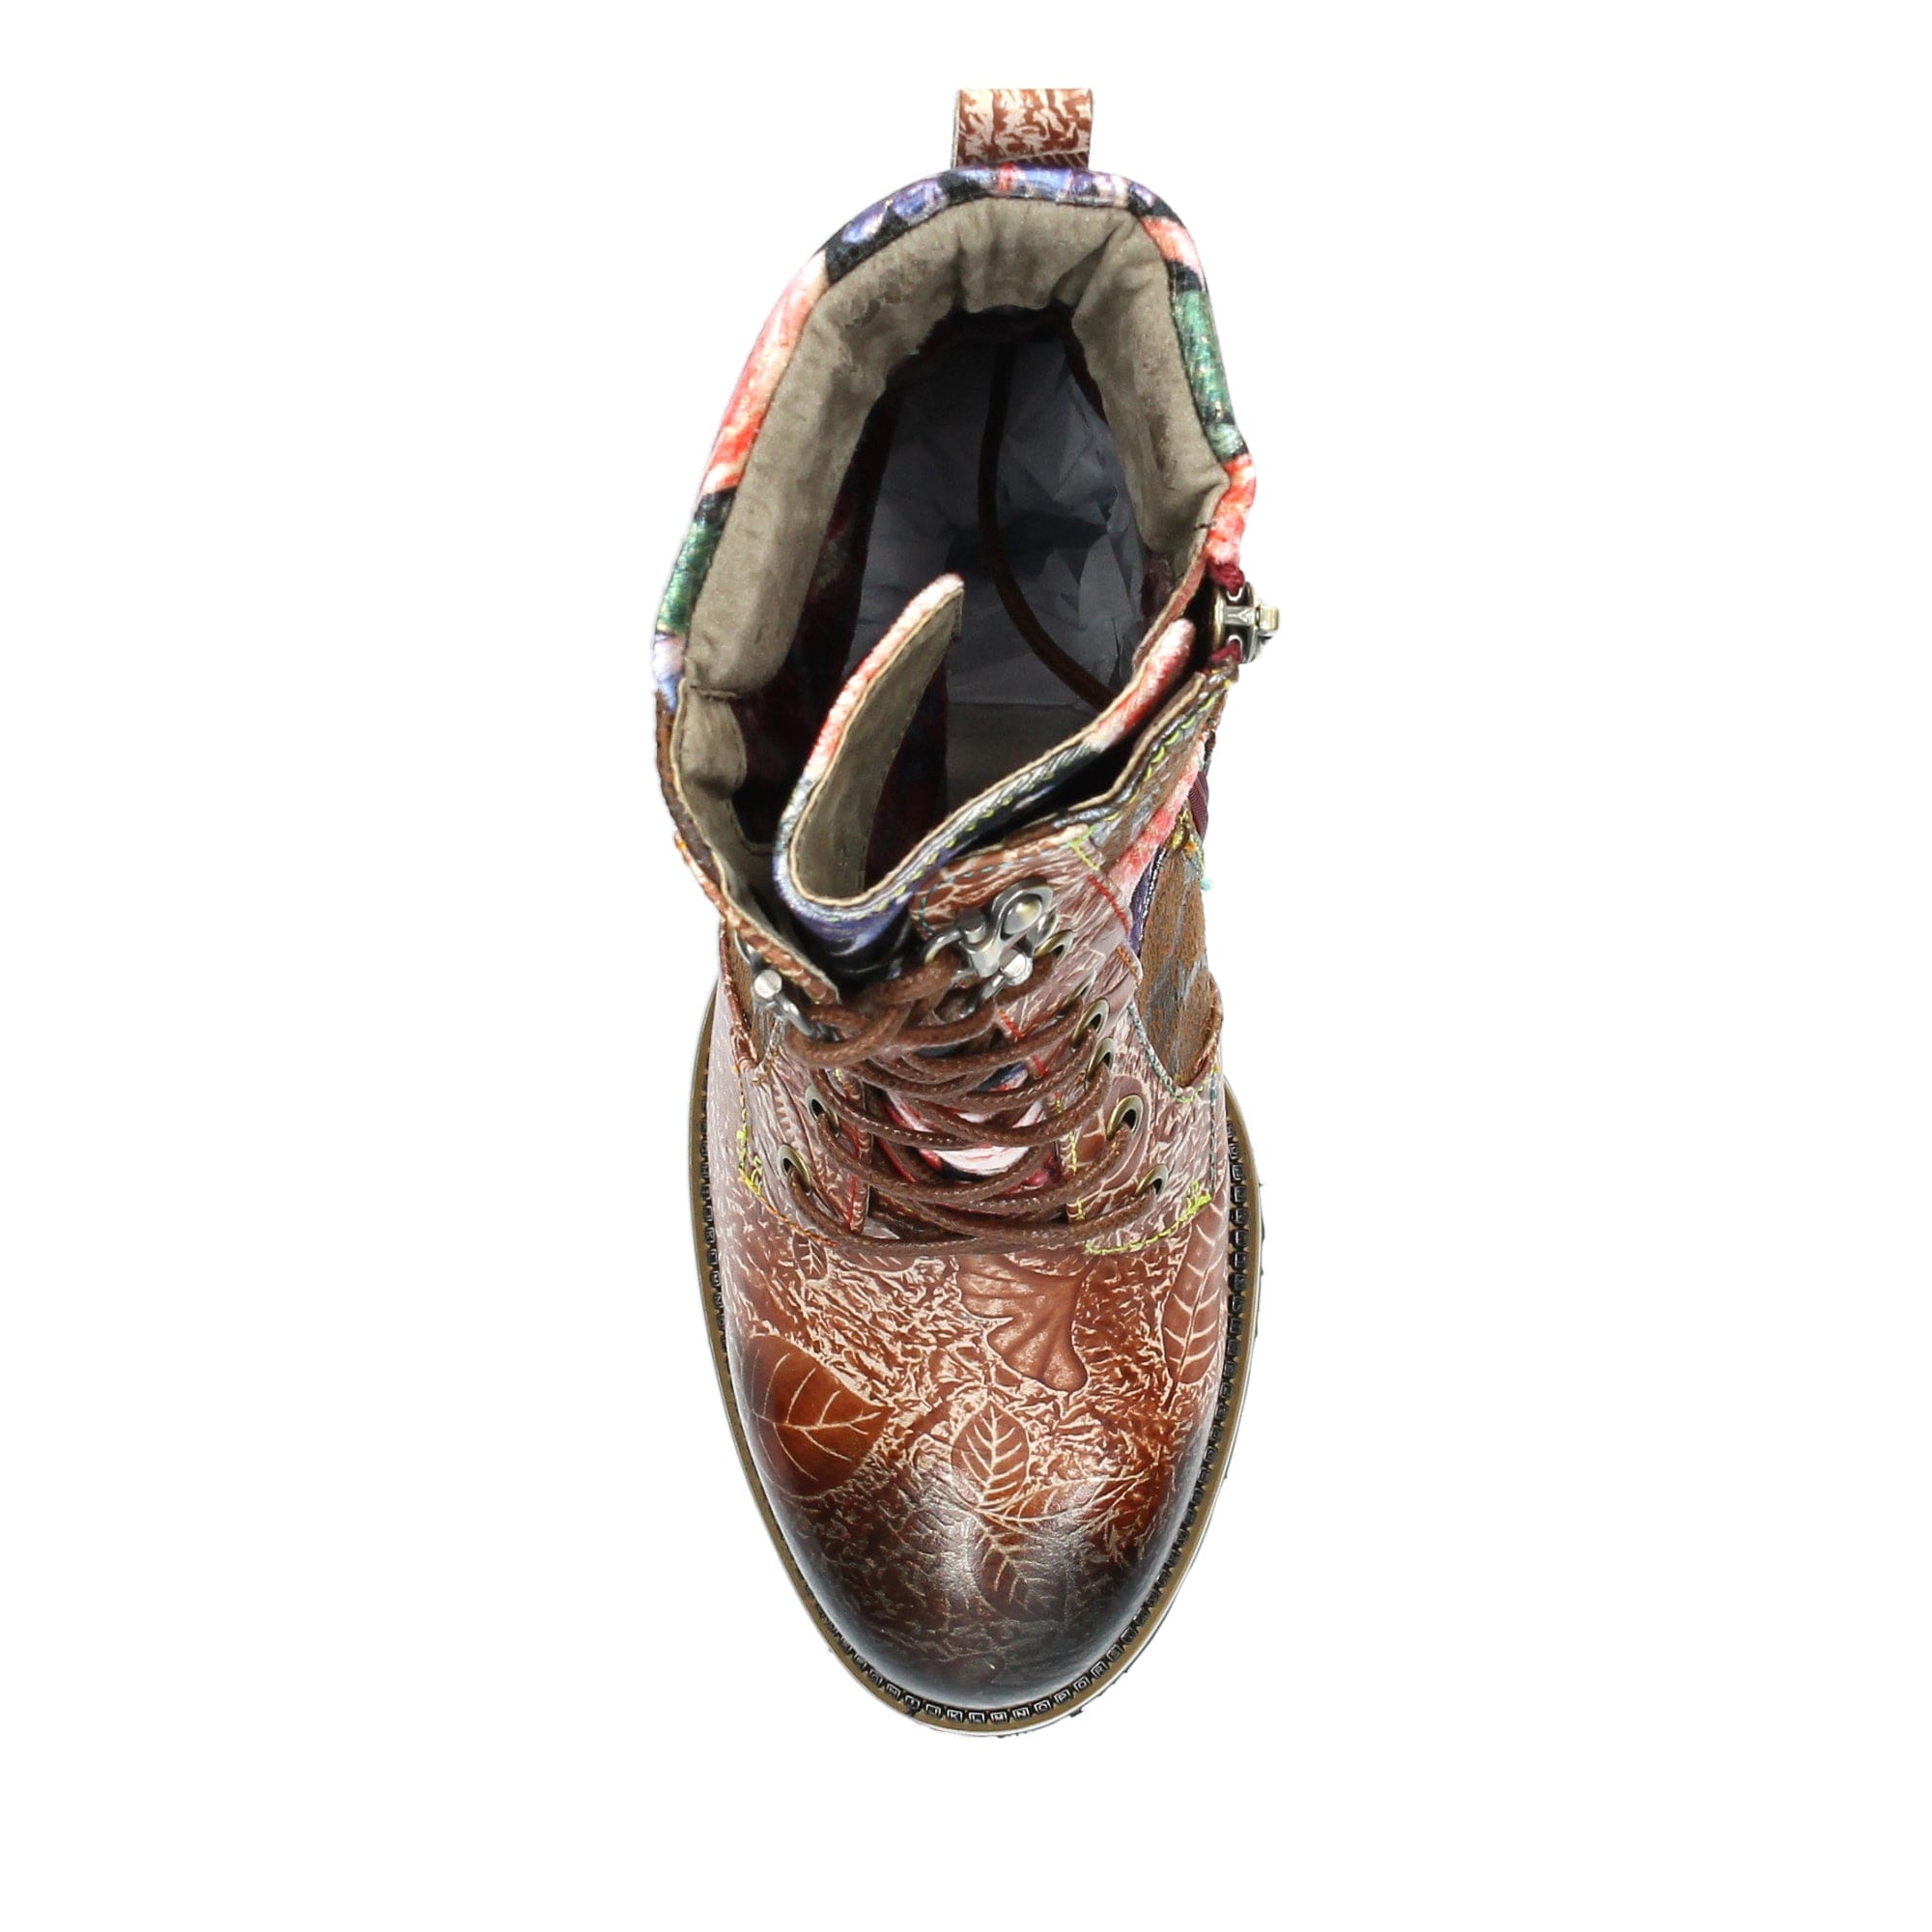 Shoe MAEVAO 06 - Boot